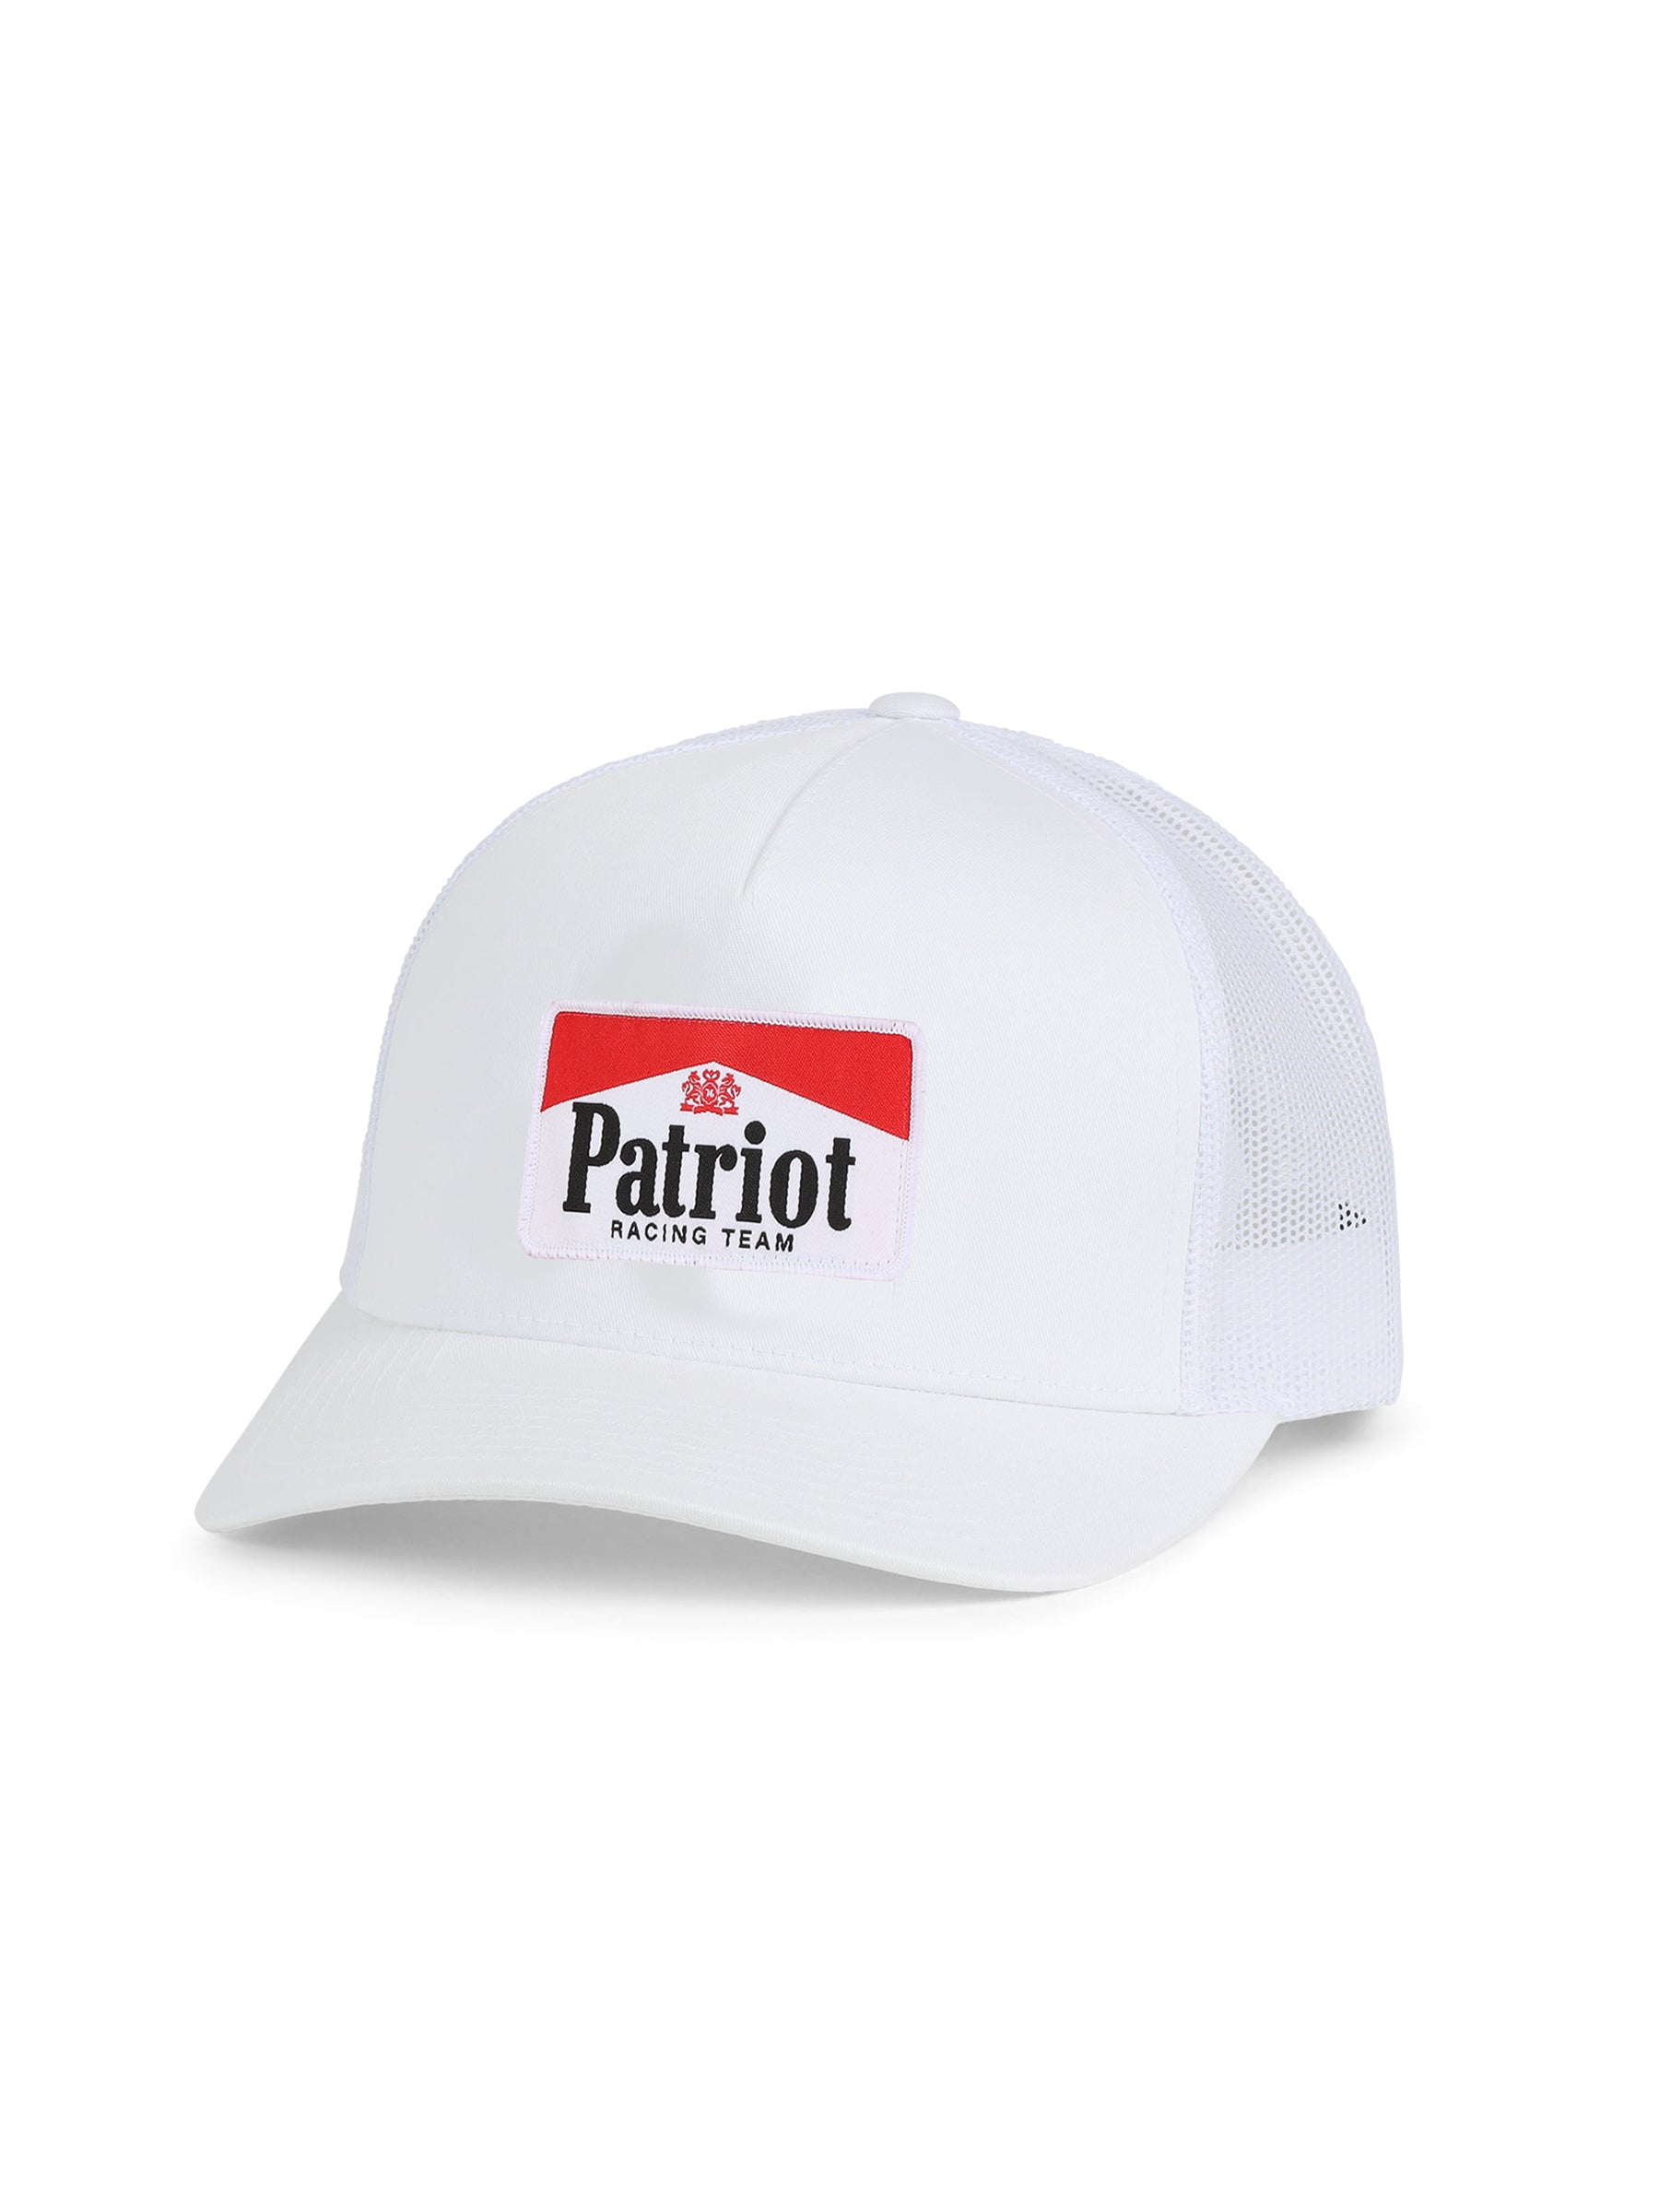 Patriot Racing Team Hat White